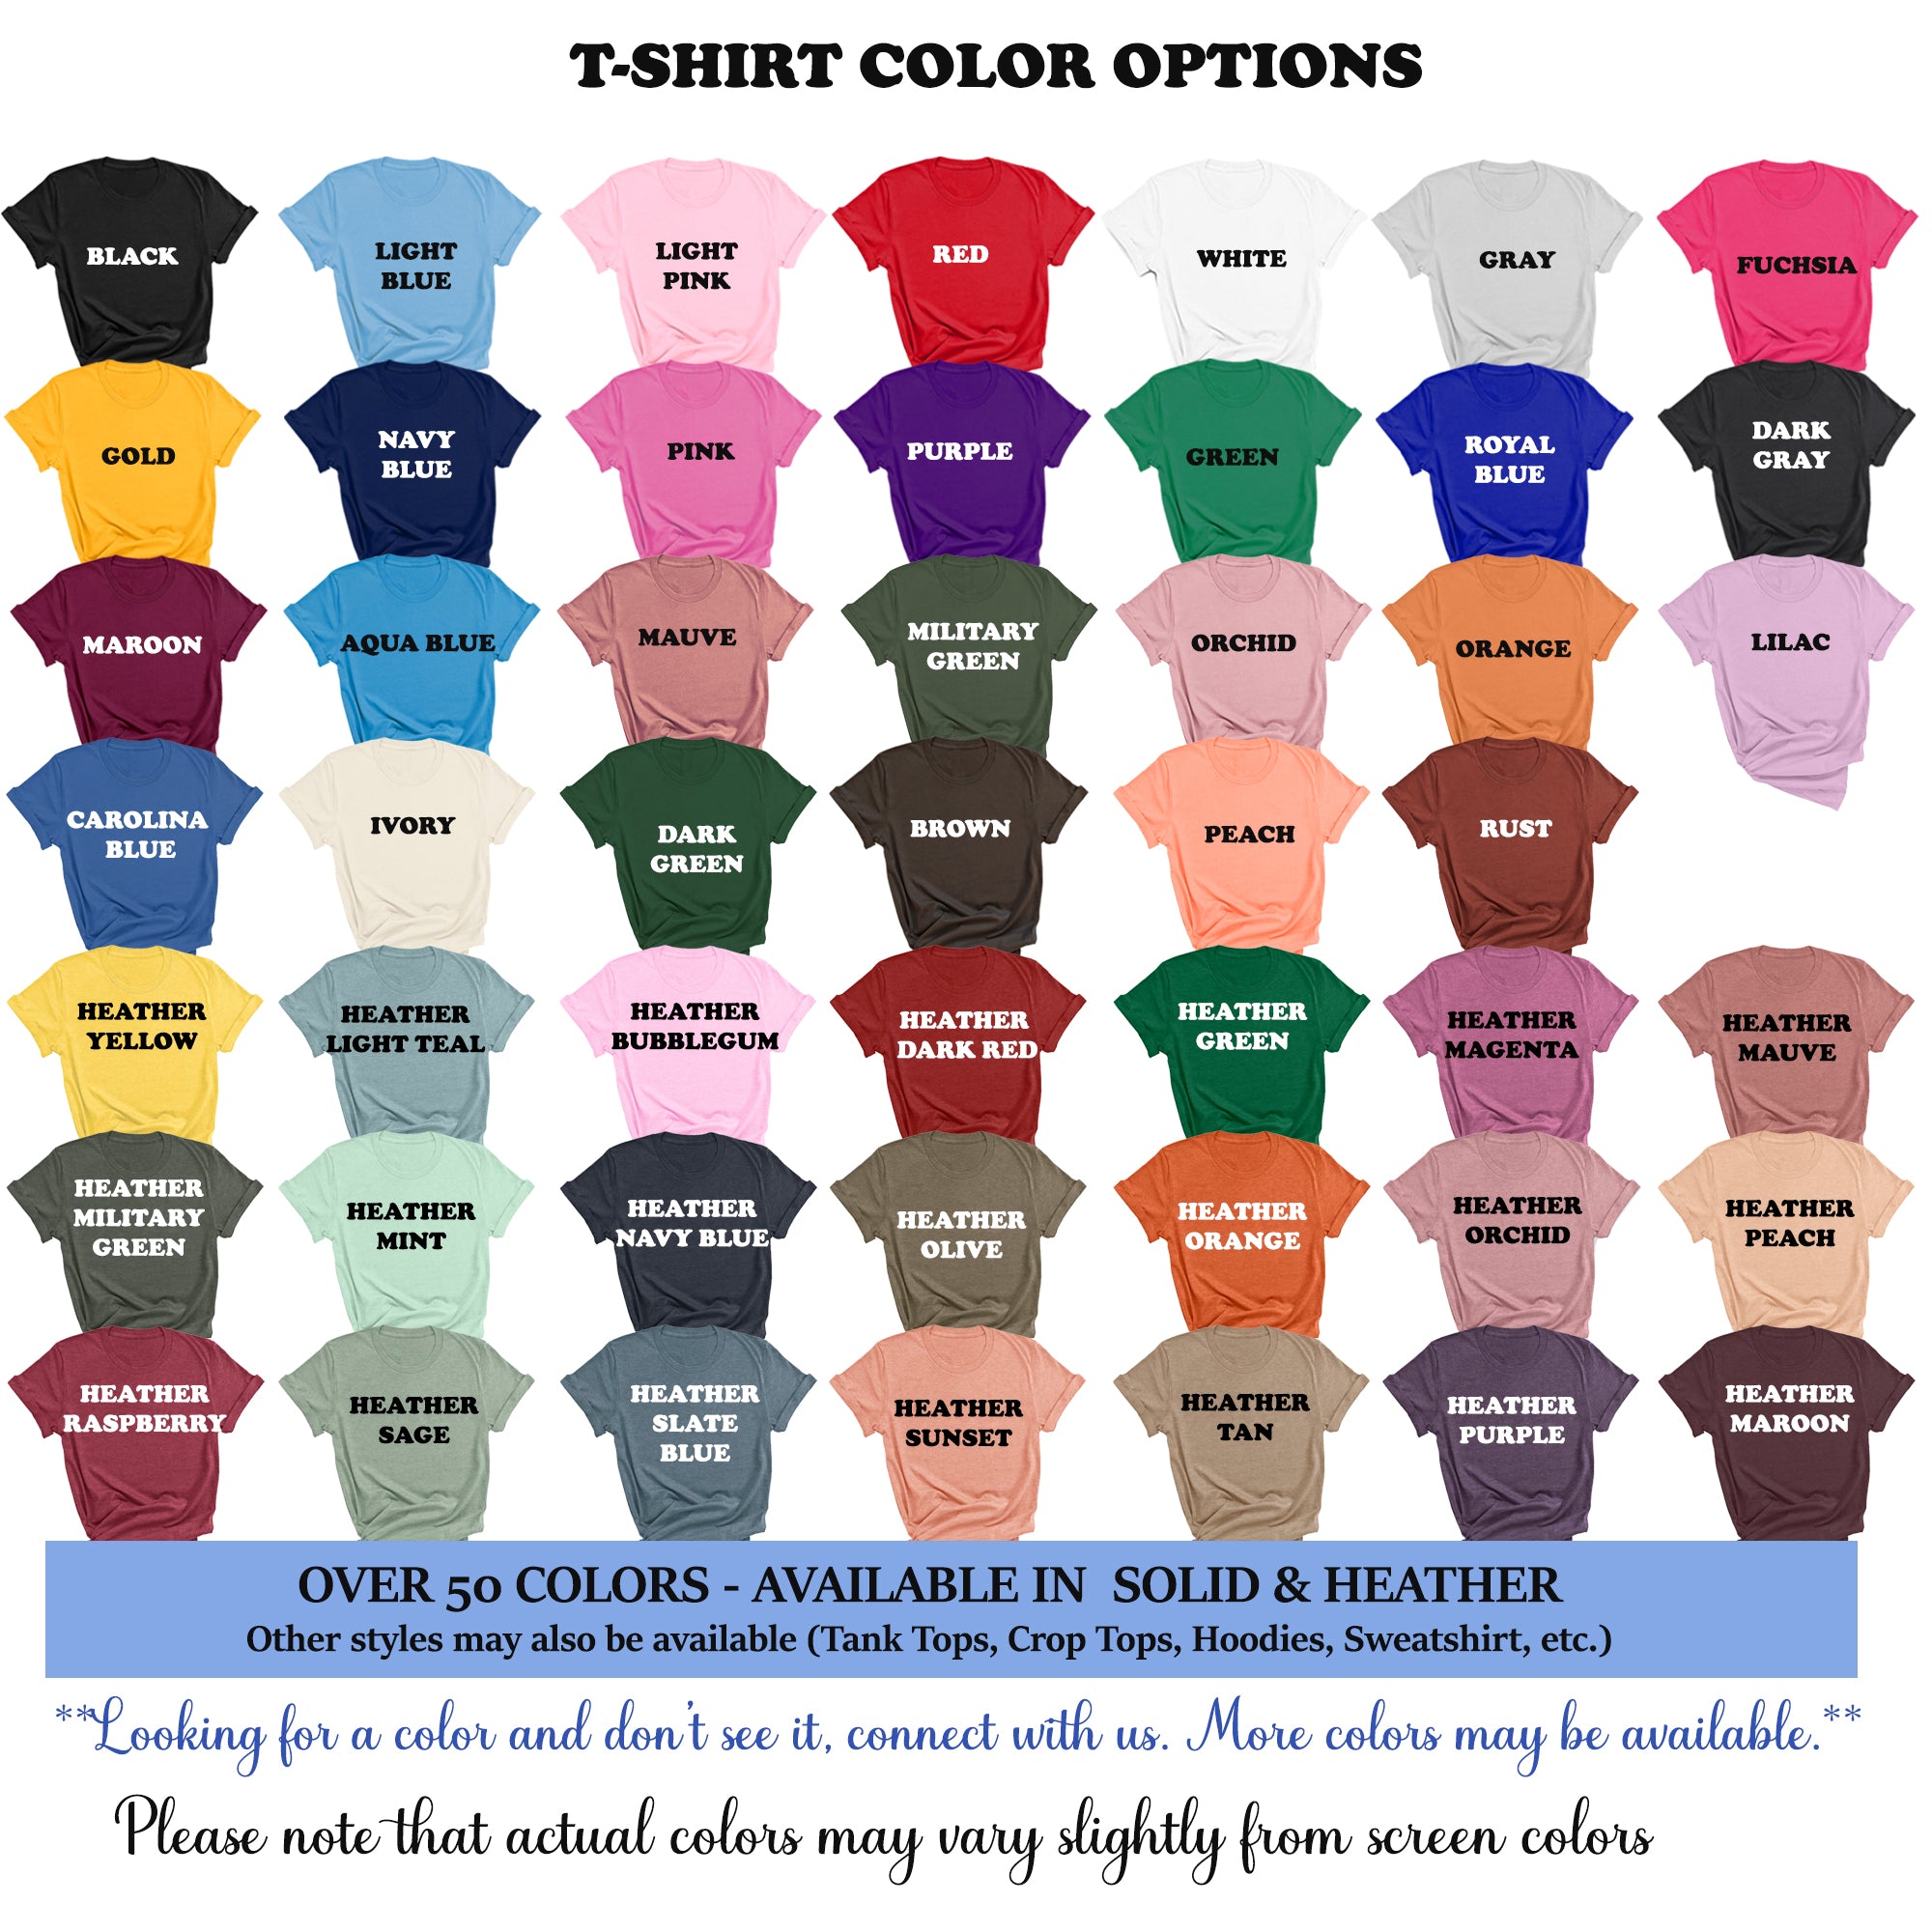 Chemo Grad T-Shirt, Tough, Brave, Proud Chemo Grad, All Ribbons, 50+ T-Shirt Colors, Cancer Awareness T-Shirts